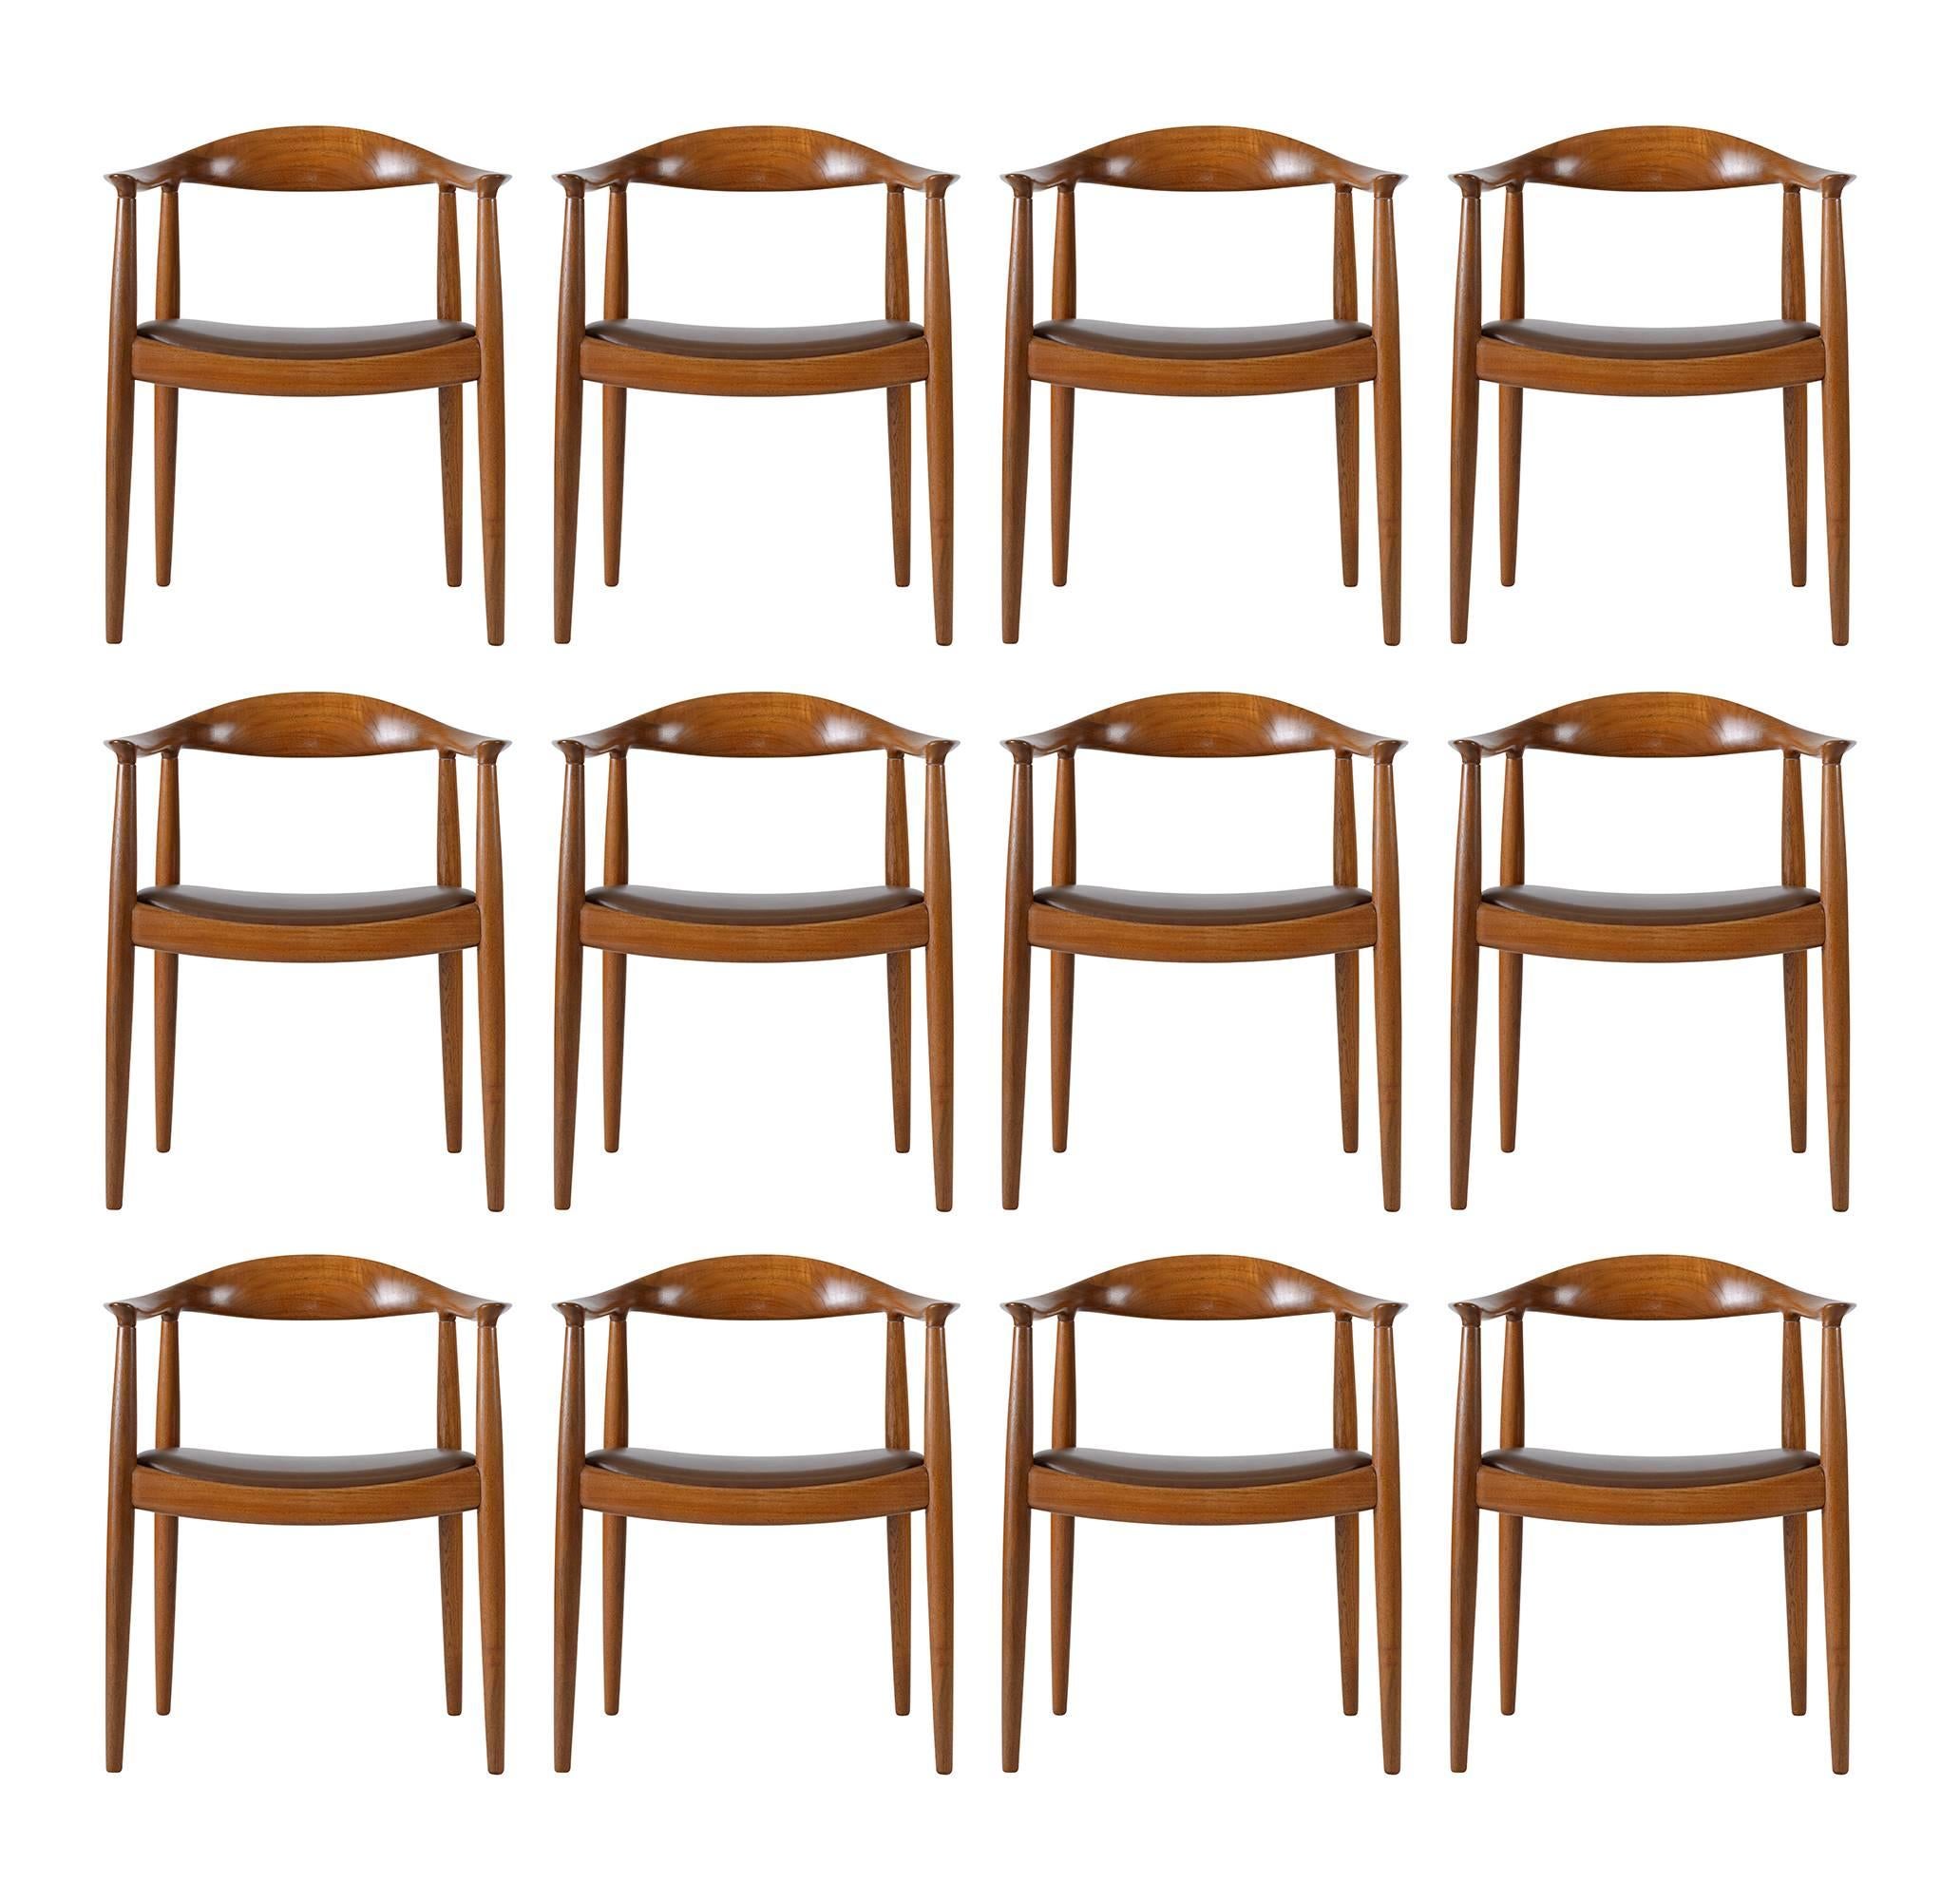 Set of 12 Hans Wegner JH-503 Chairs